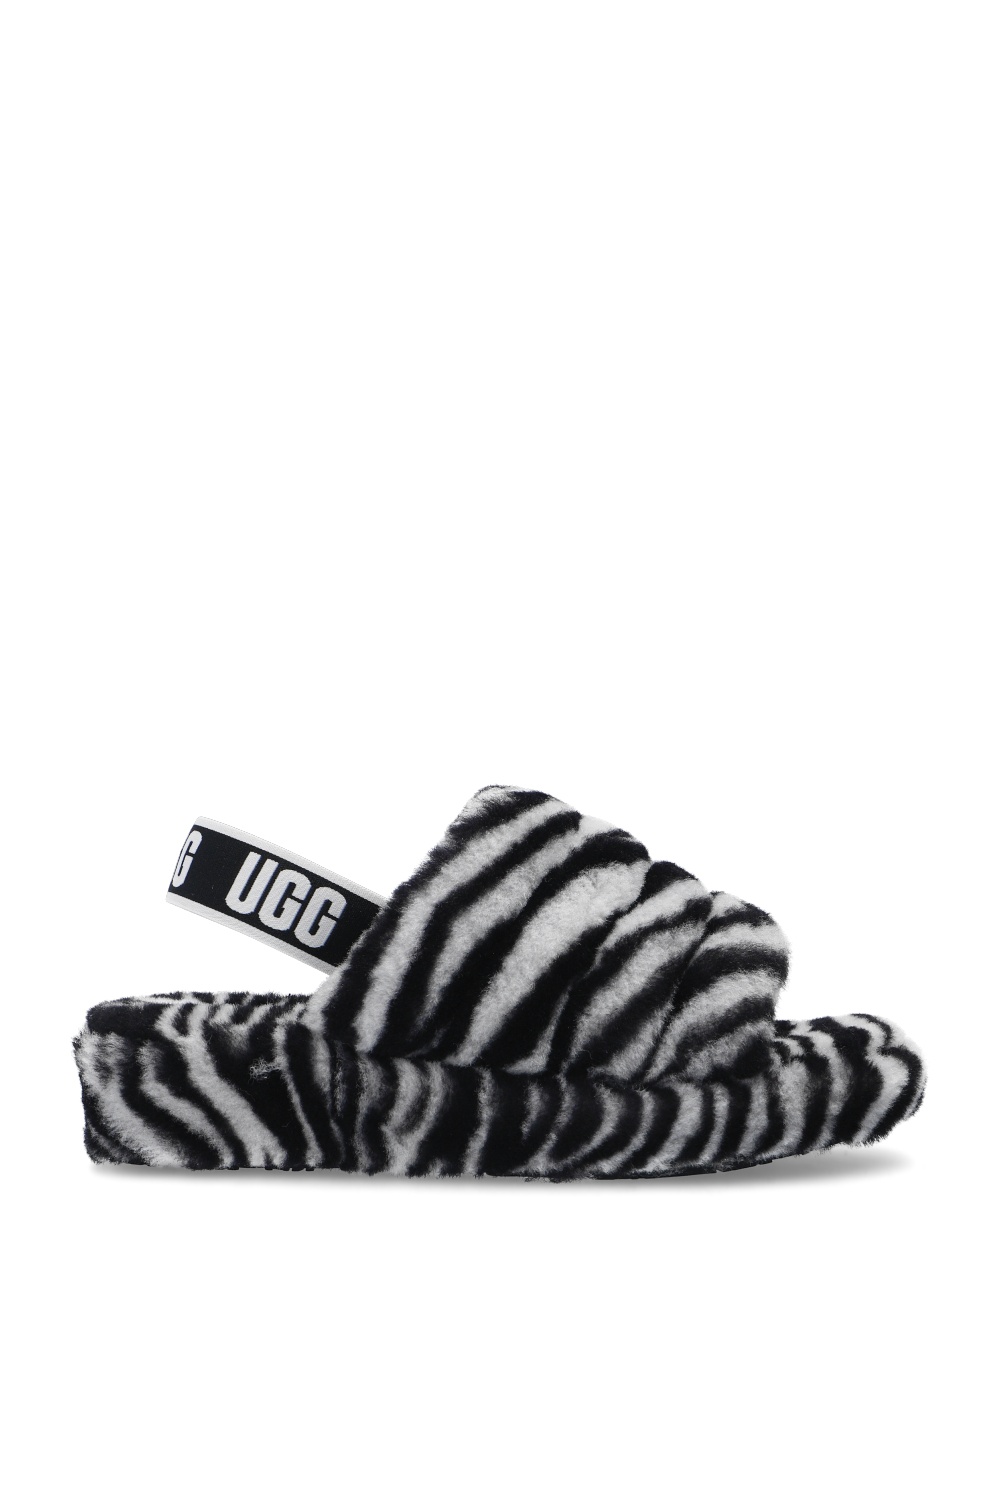 ugg zebra slippers